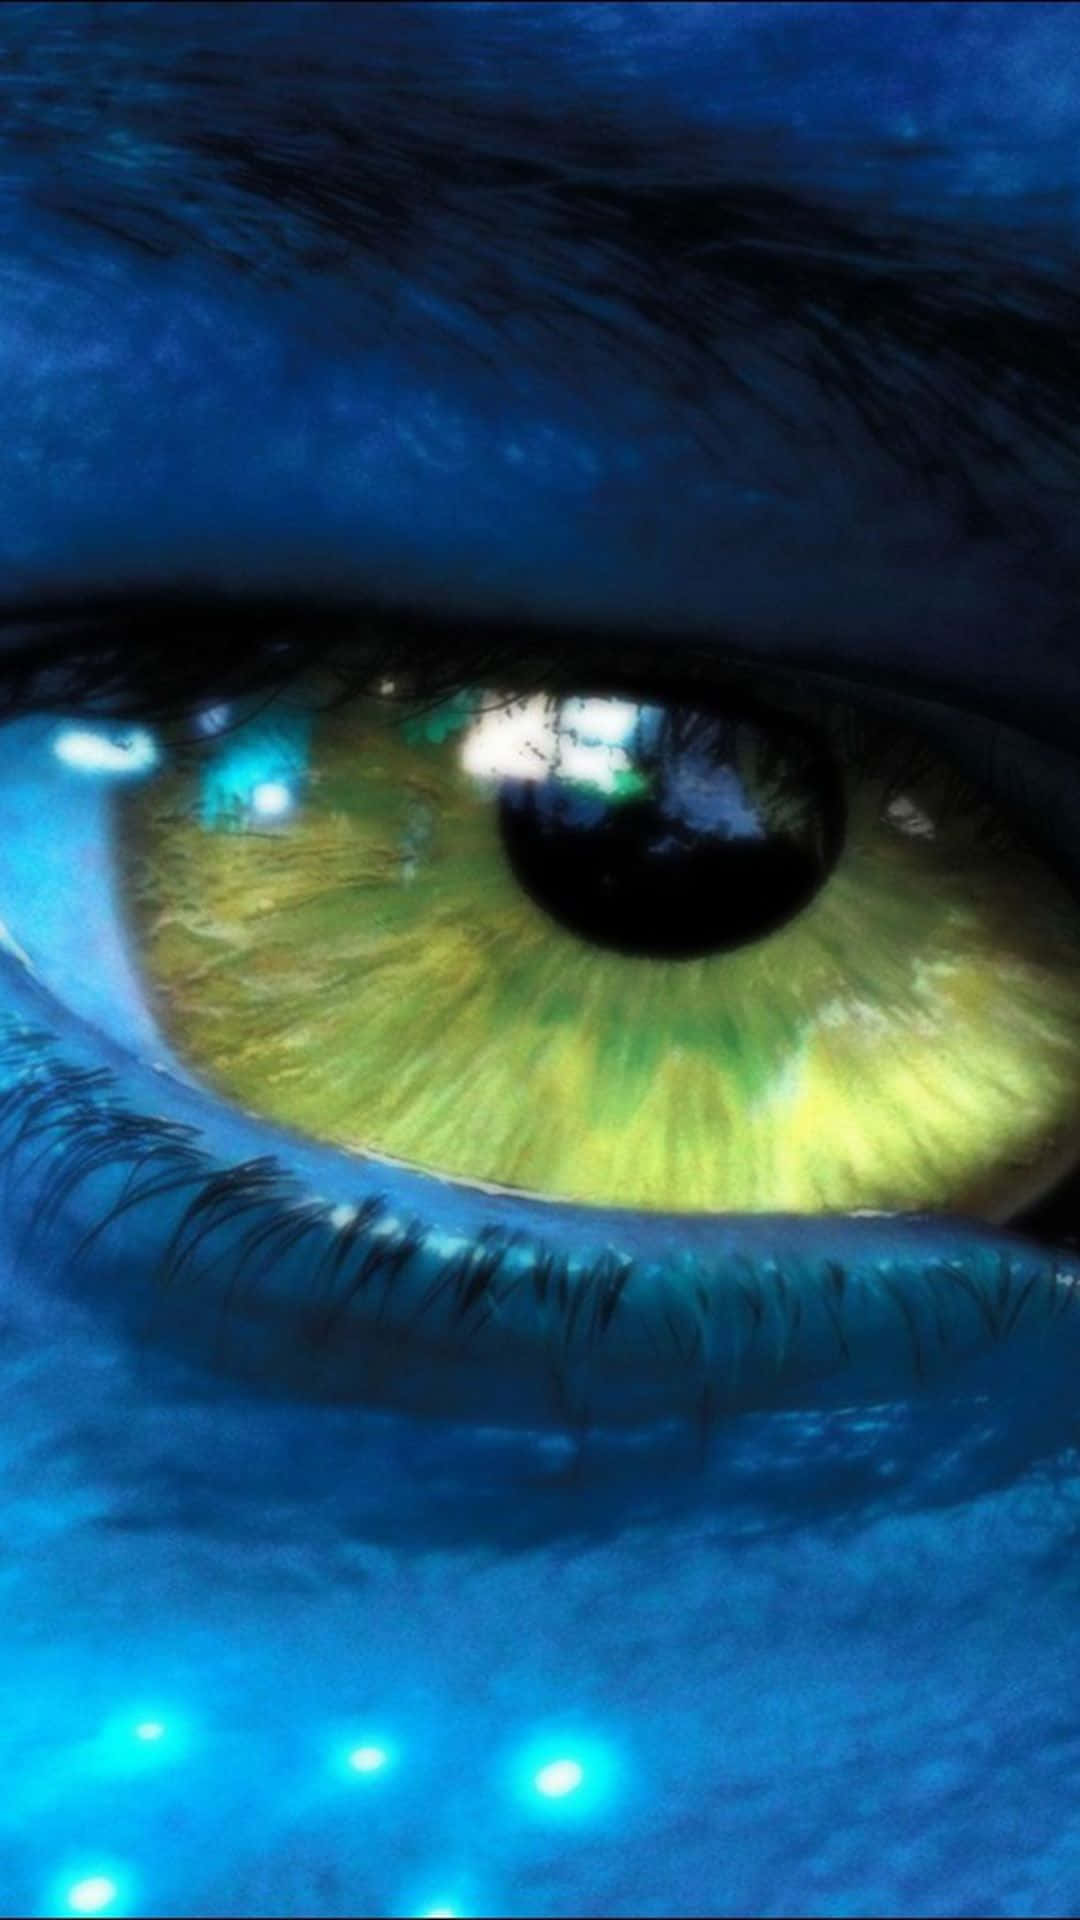 Galaxy S5 Avatar Navi Cameron Diaz Tapet: Et stilfuldt tapet med Navi-avatar-motiver og Cameron Diaz' ansigt. Wallpaper